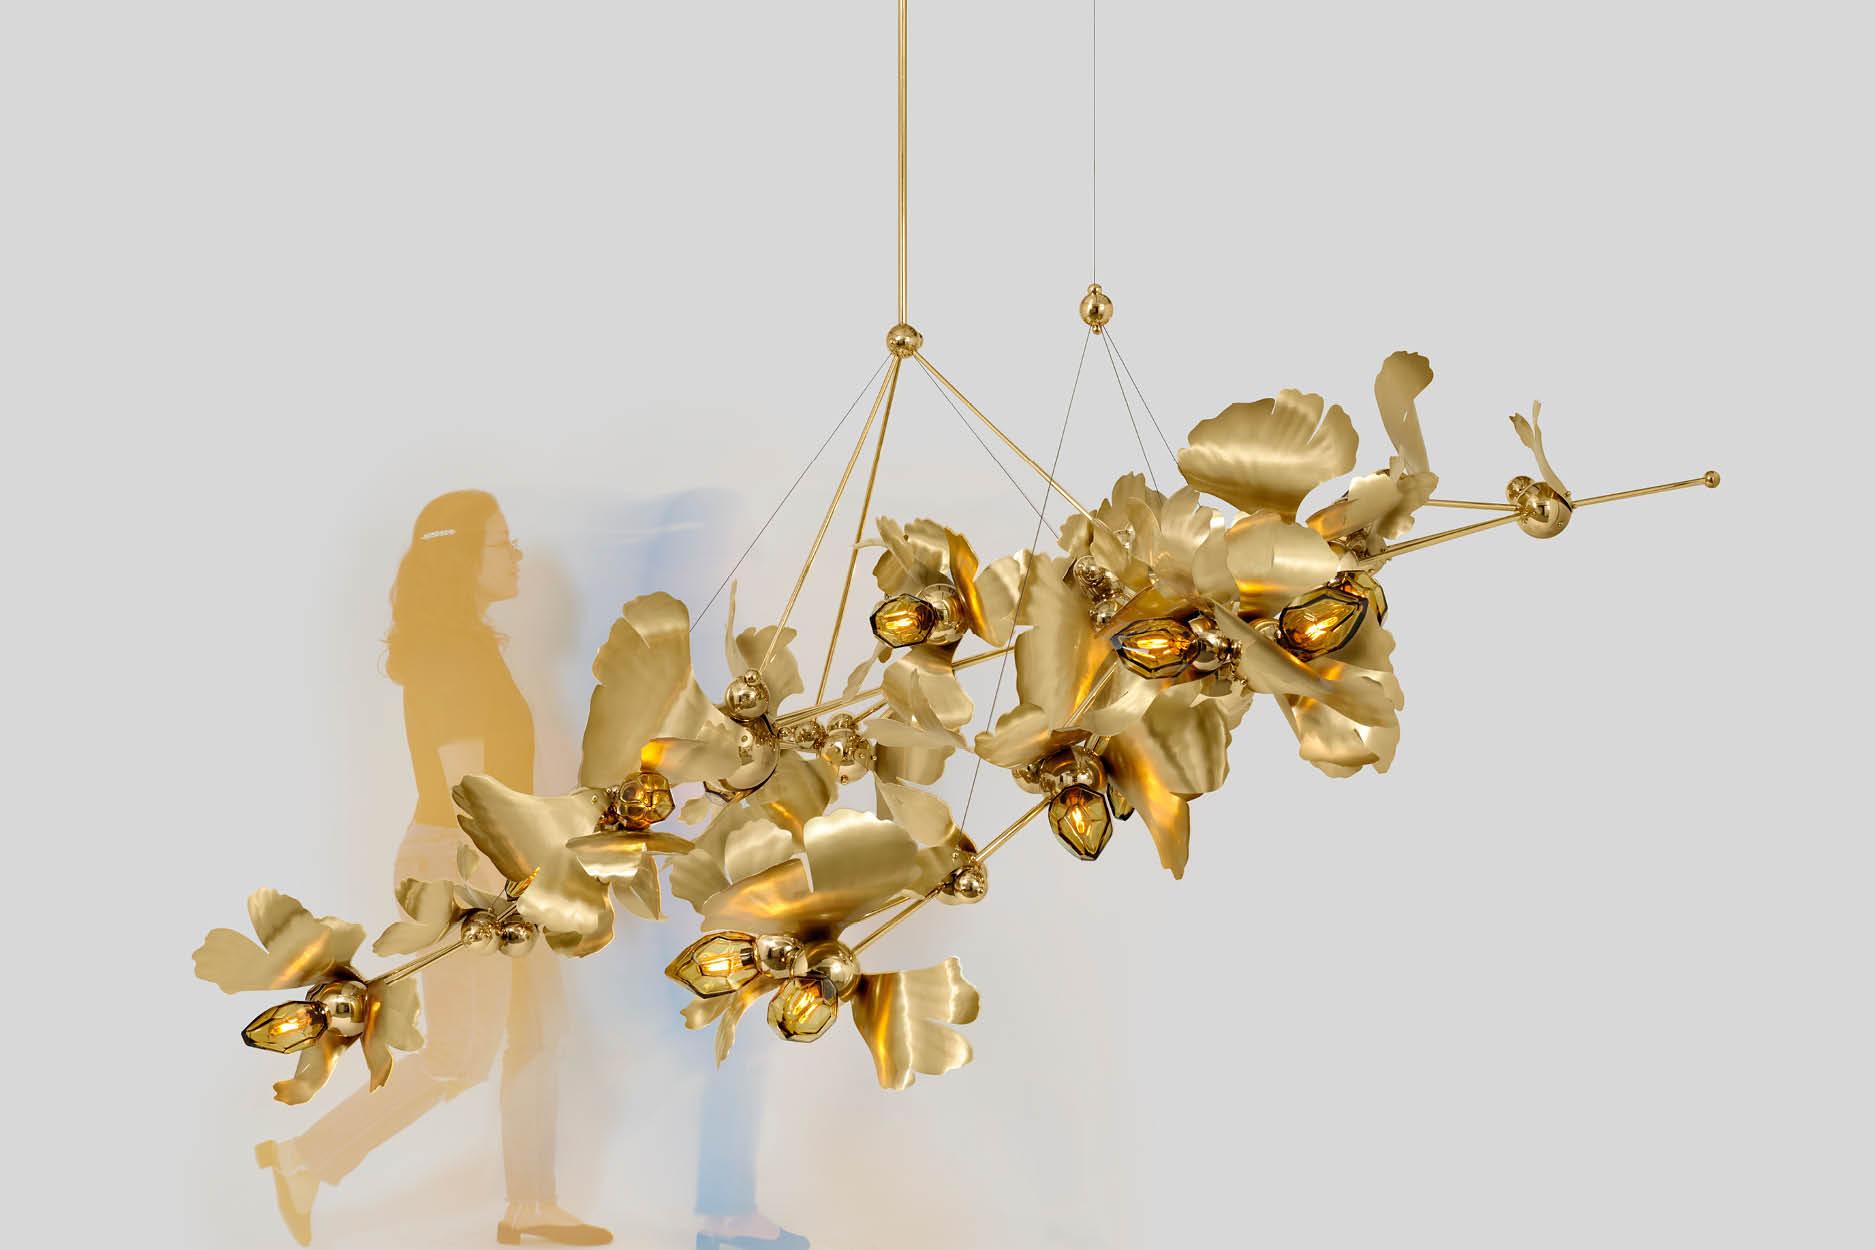 Designer Rosie Li and Her Modern, Sculptural Lighting Creations